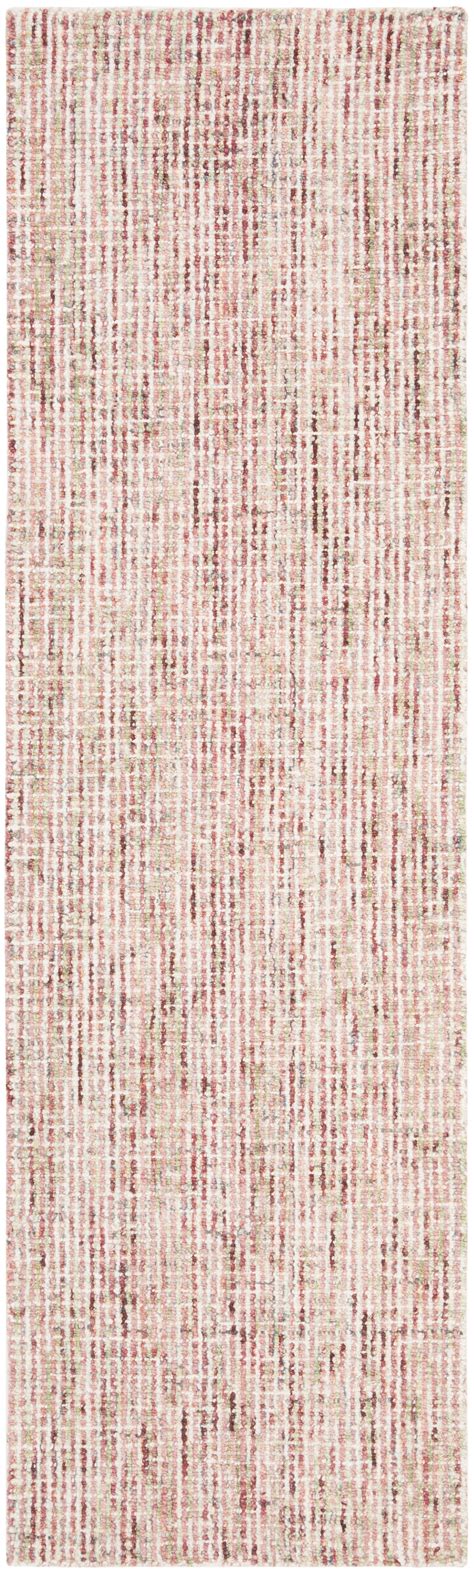 Safavieh Abstract Delia Geometric Striped Wool Area Rug Beigerust 2